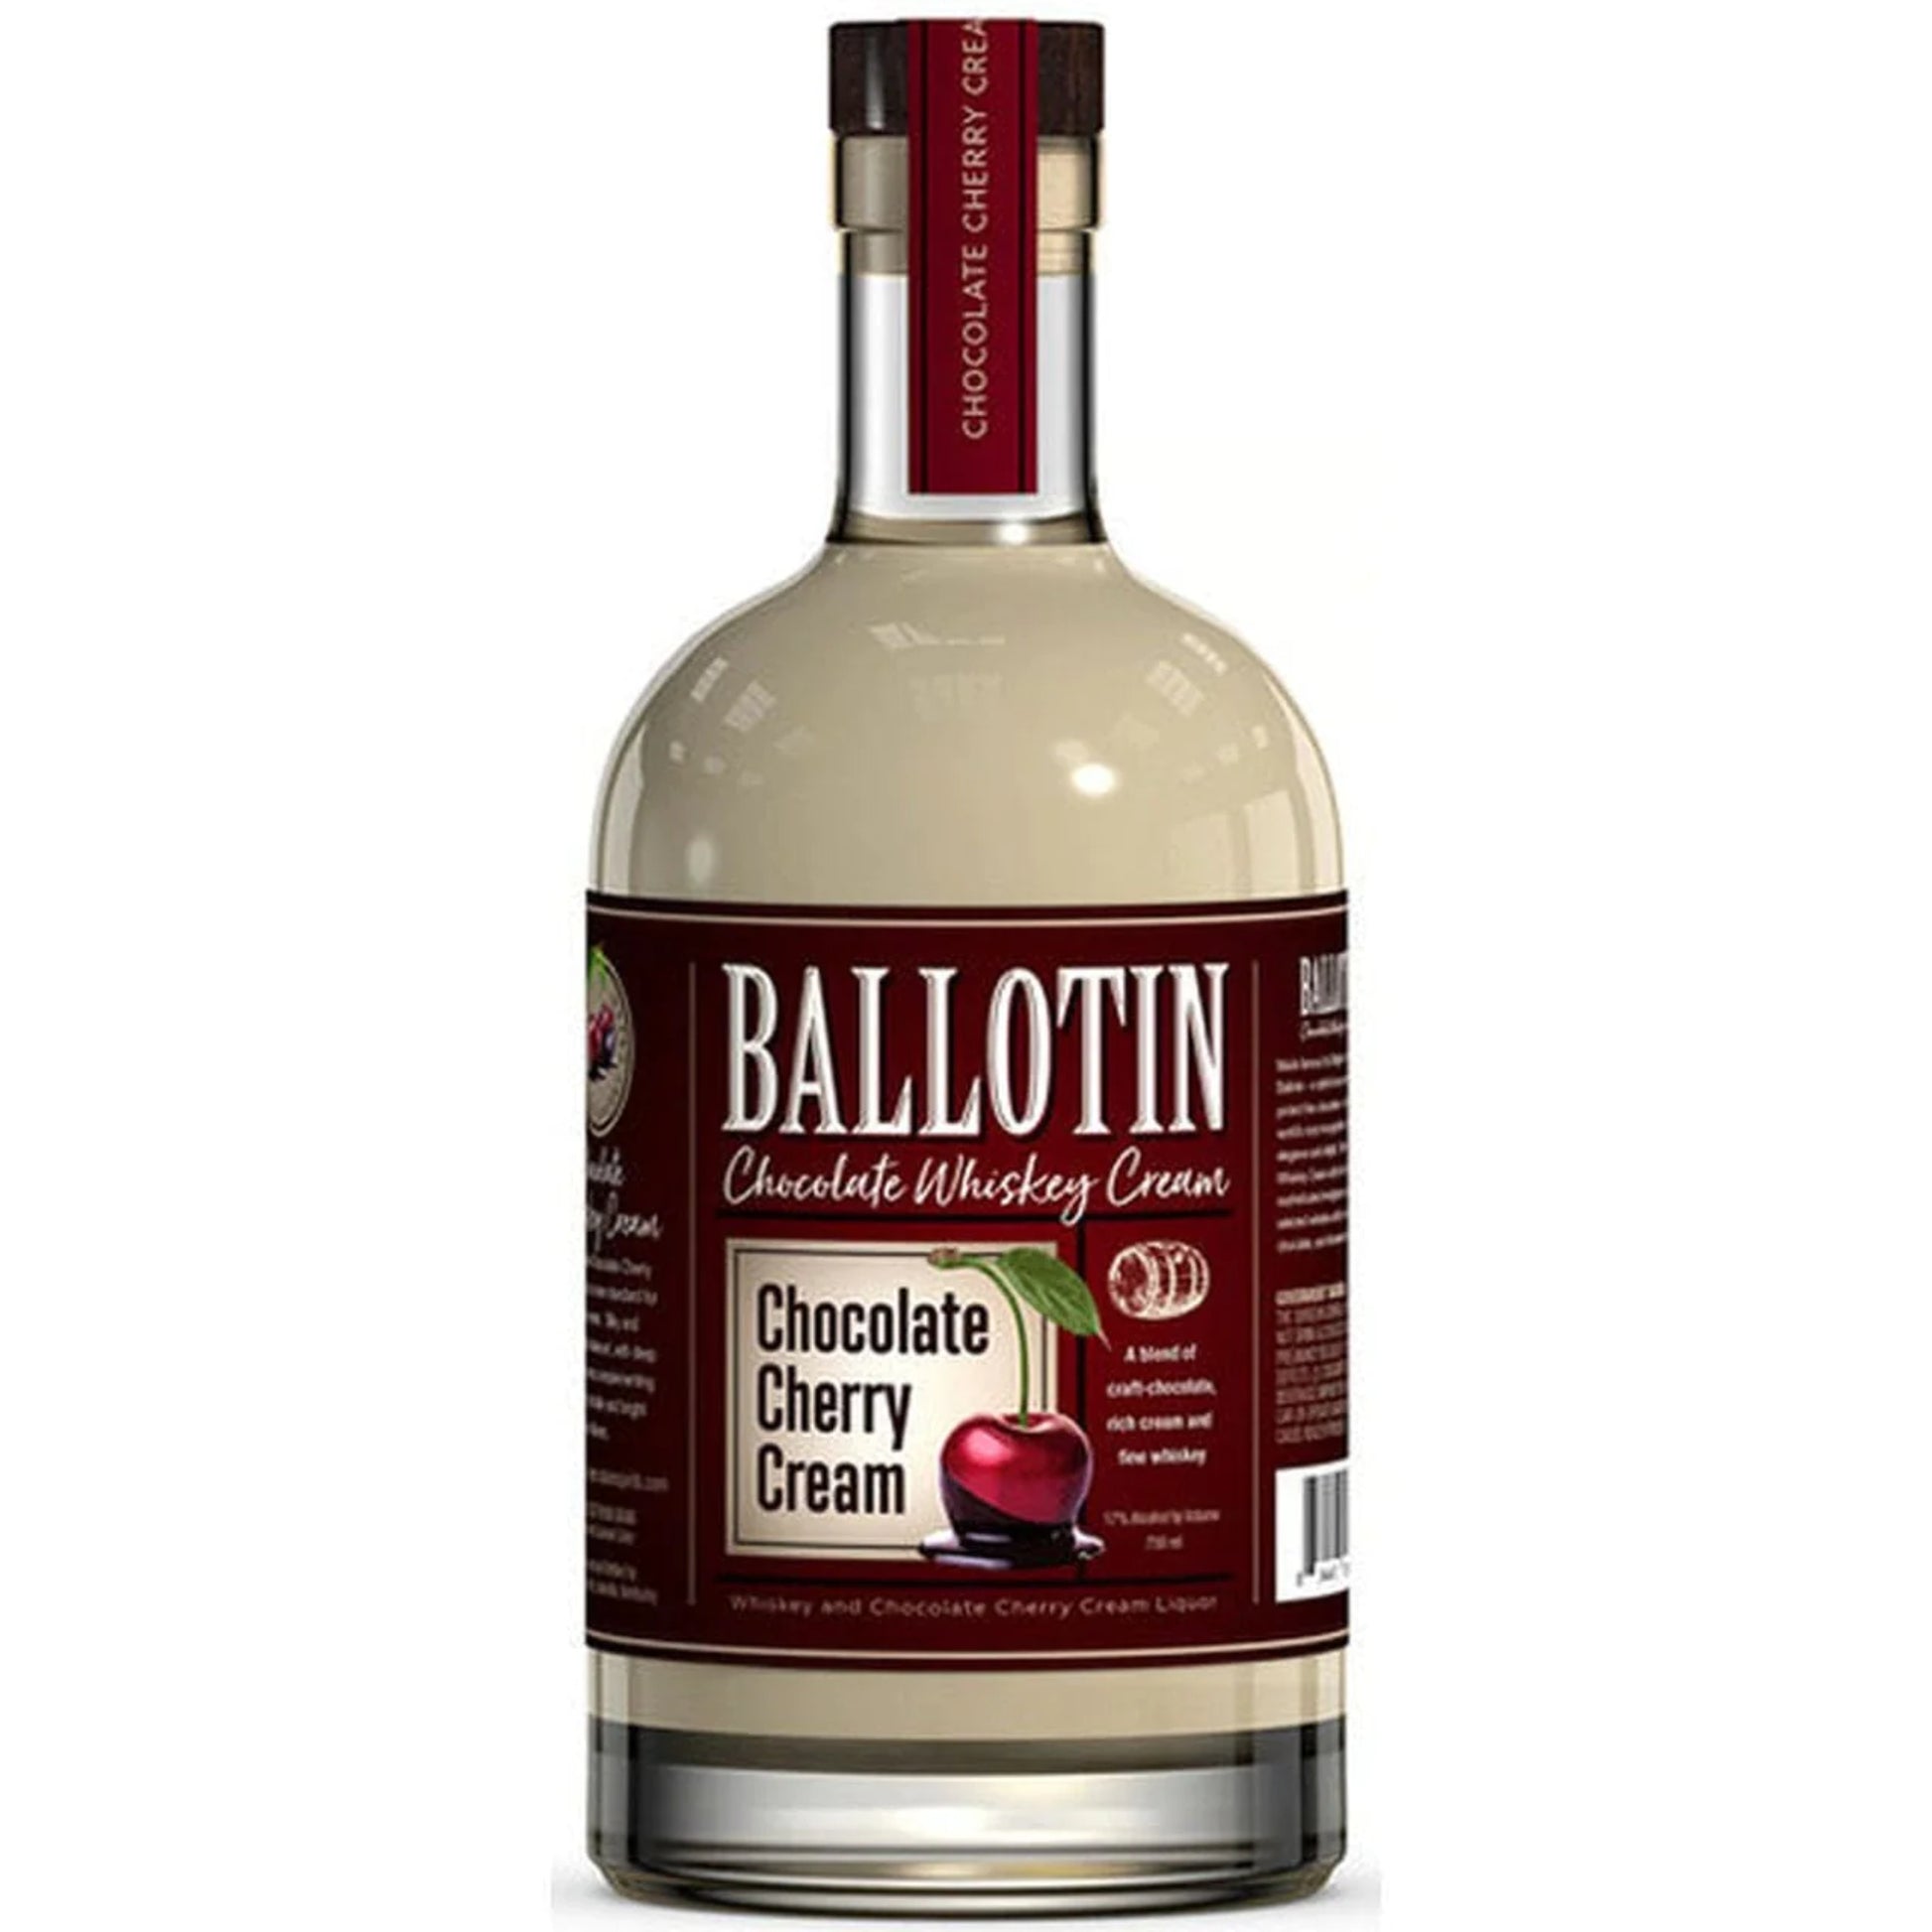 Ballotin Chocolate Cherry Cream - Liquor Geeks